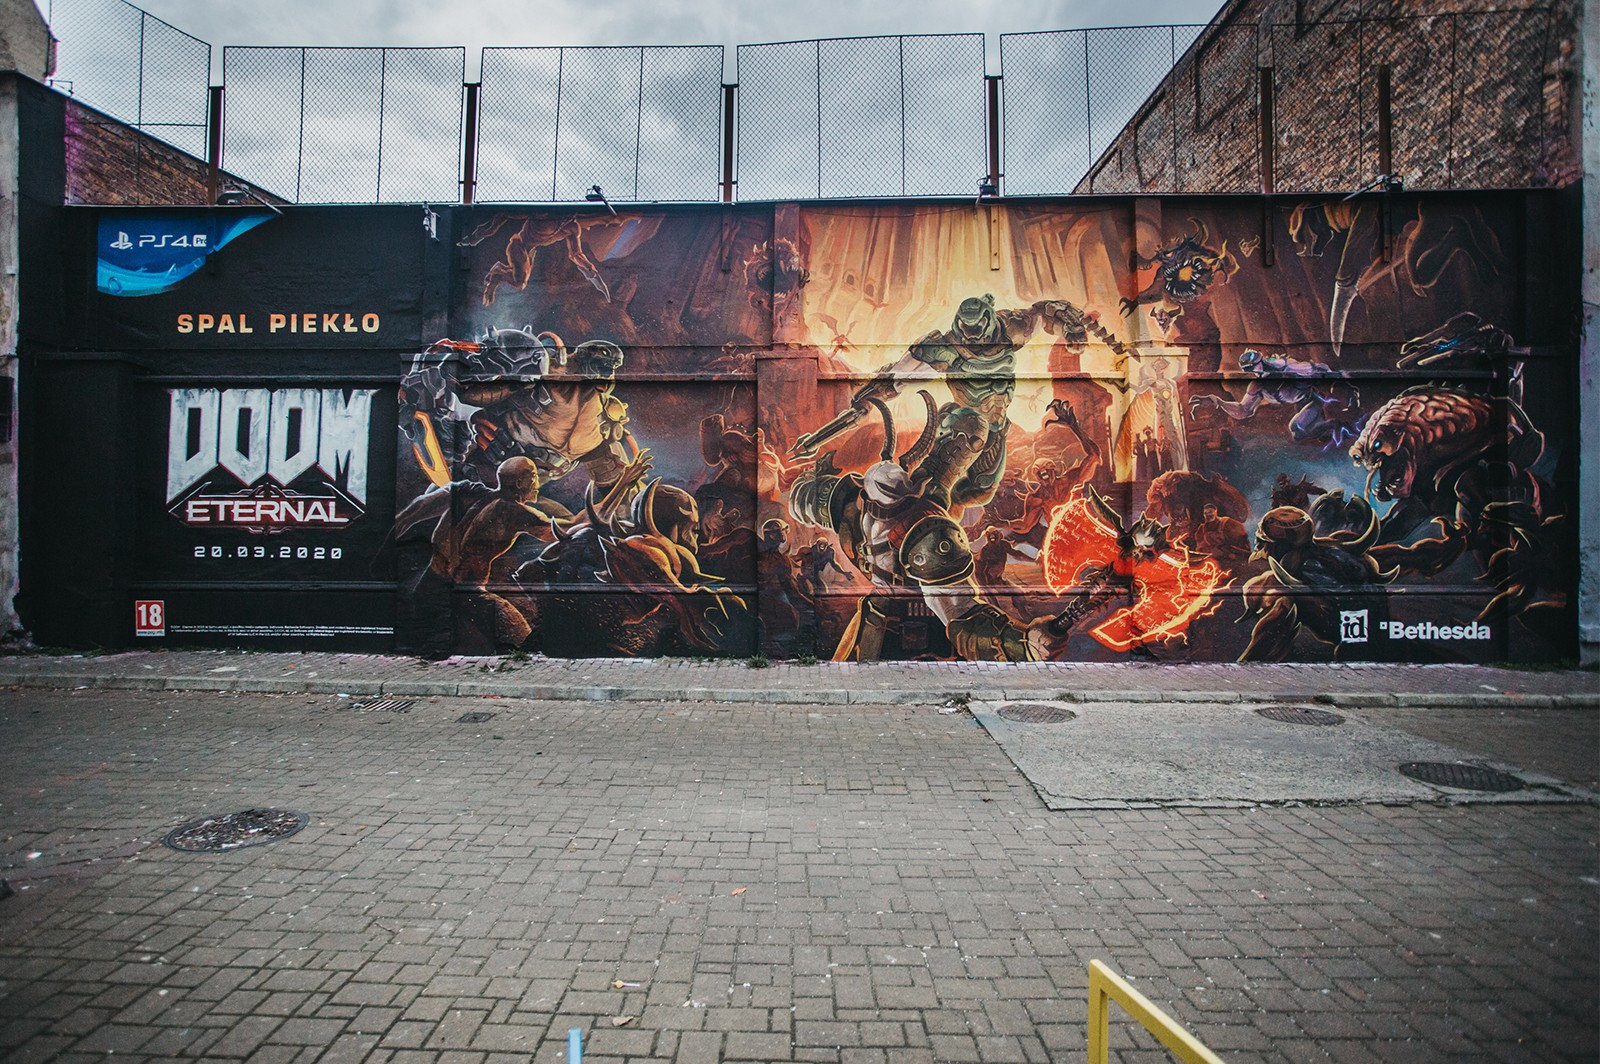 Promoting DOOM! Eternal Game in Cracow | SPAL PIEKŁO! | Portfolio